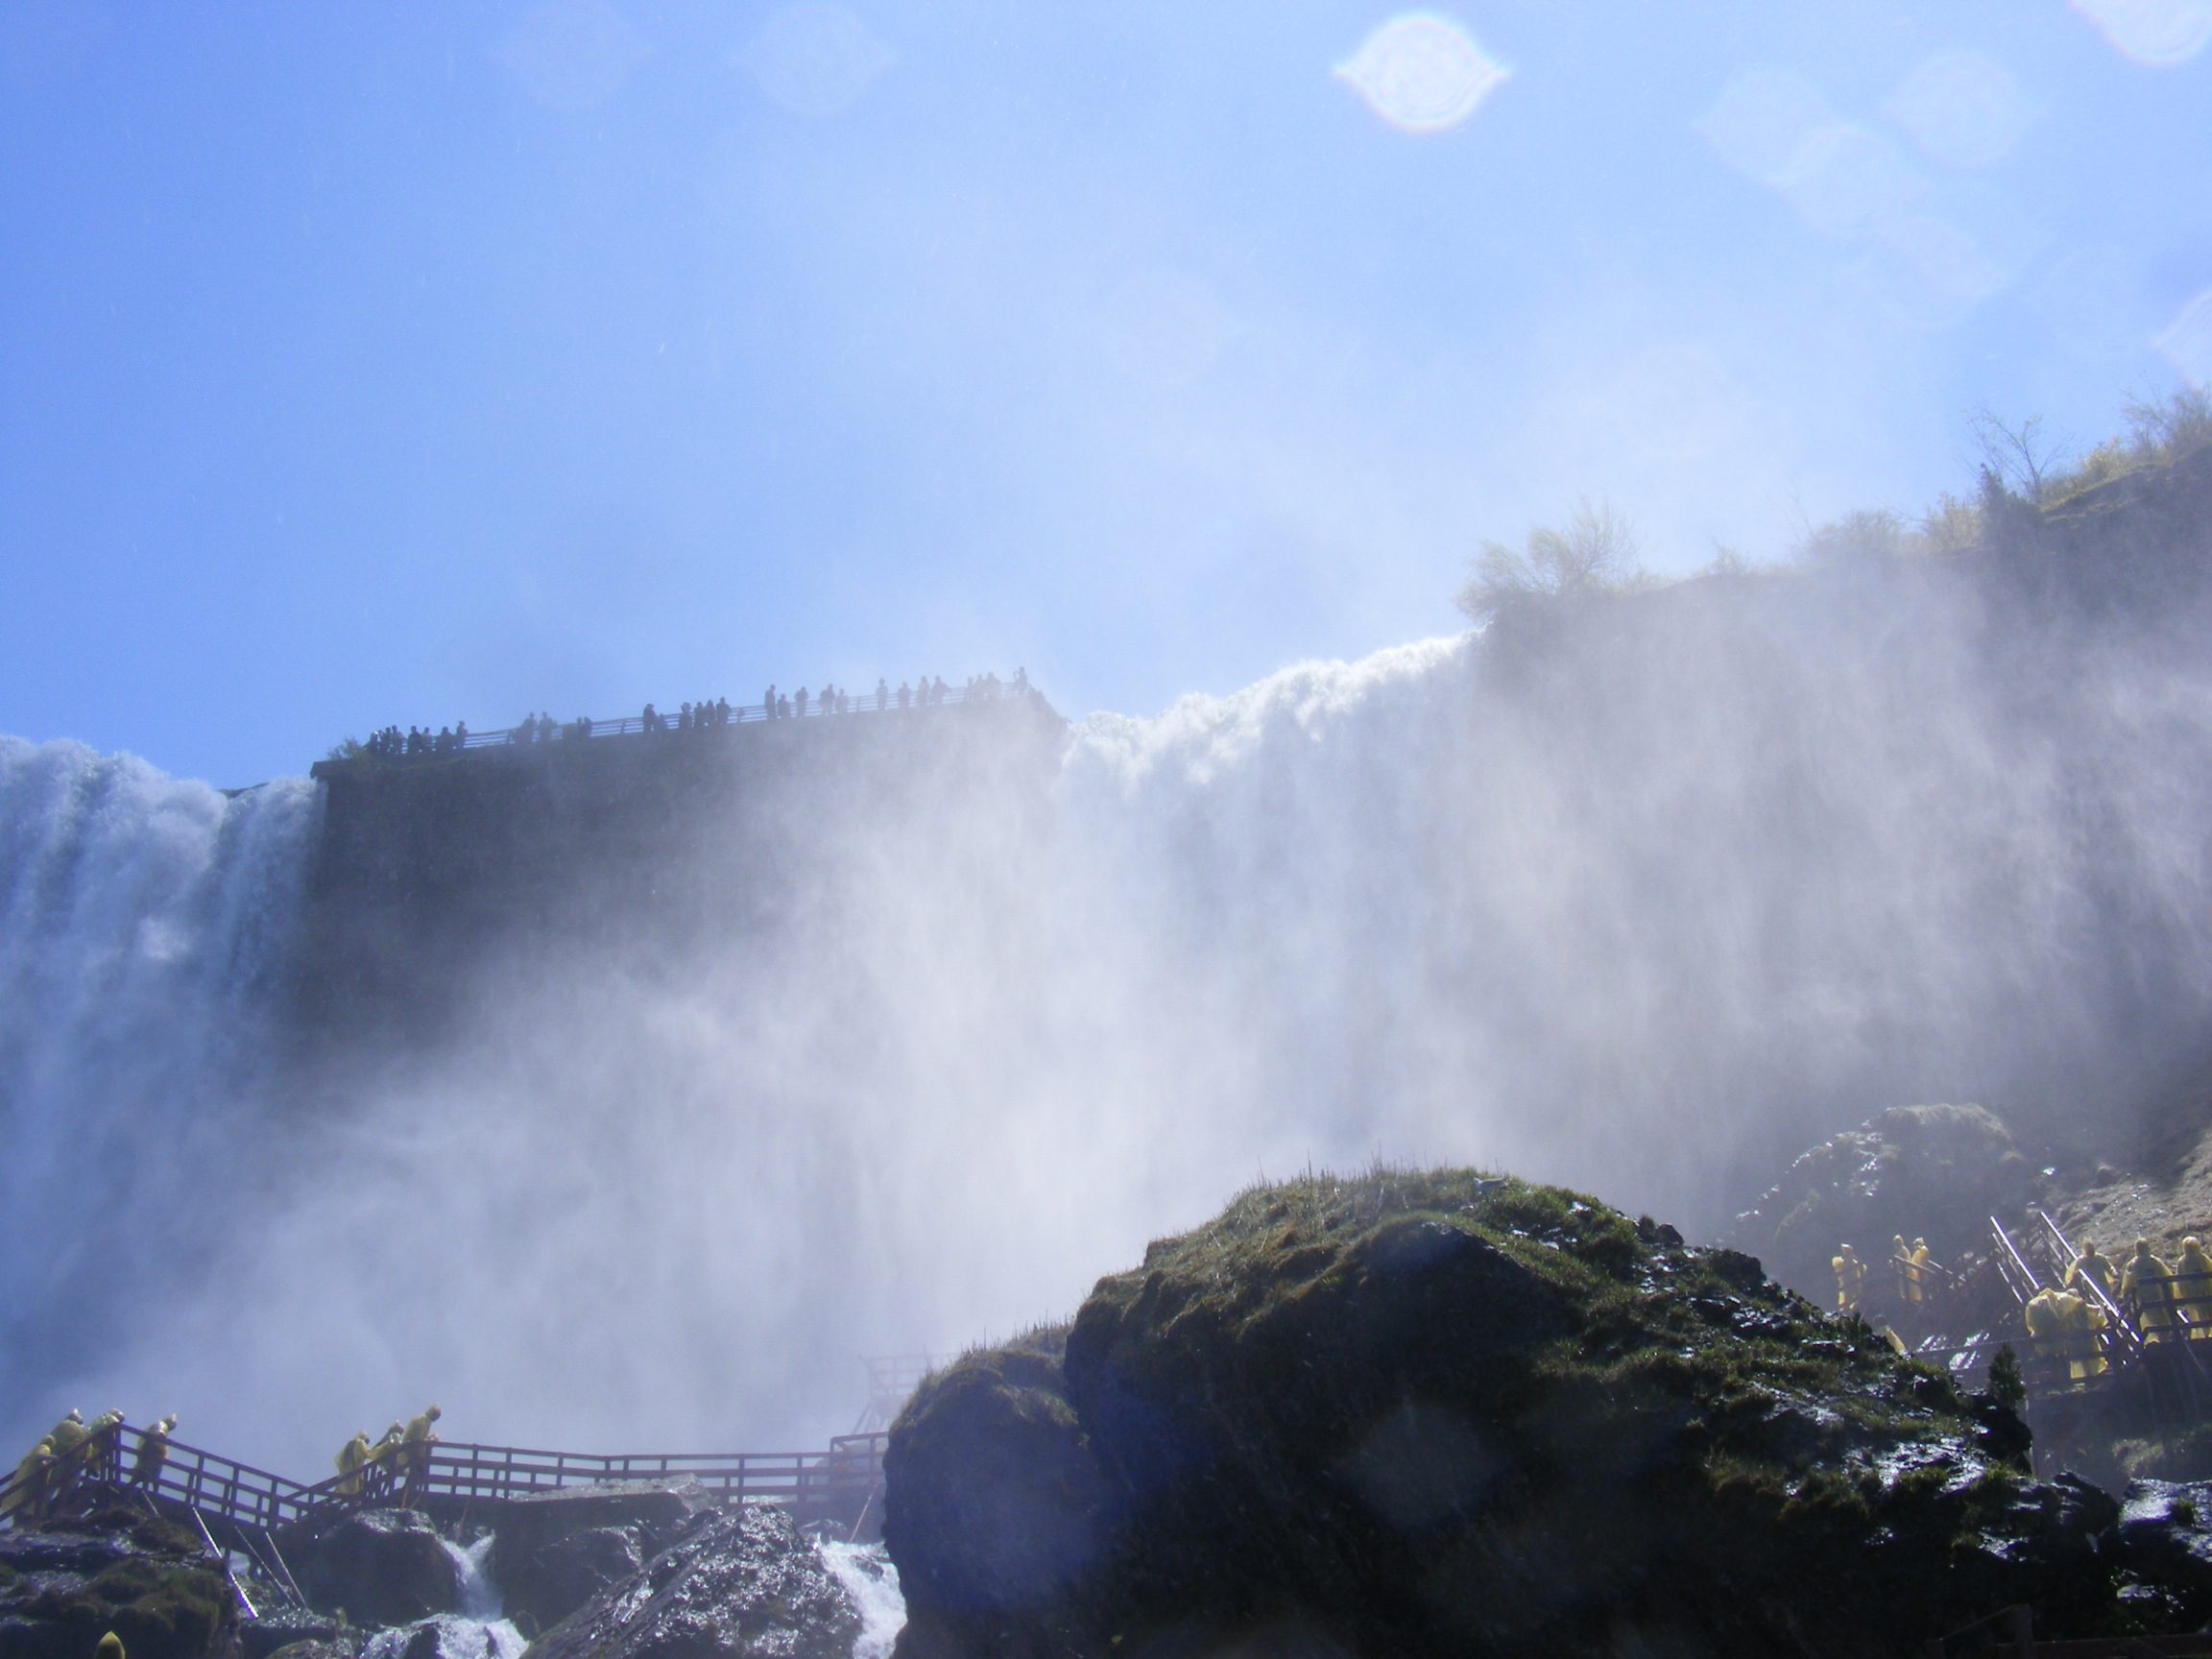 Beauty of niagara falls photo